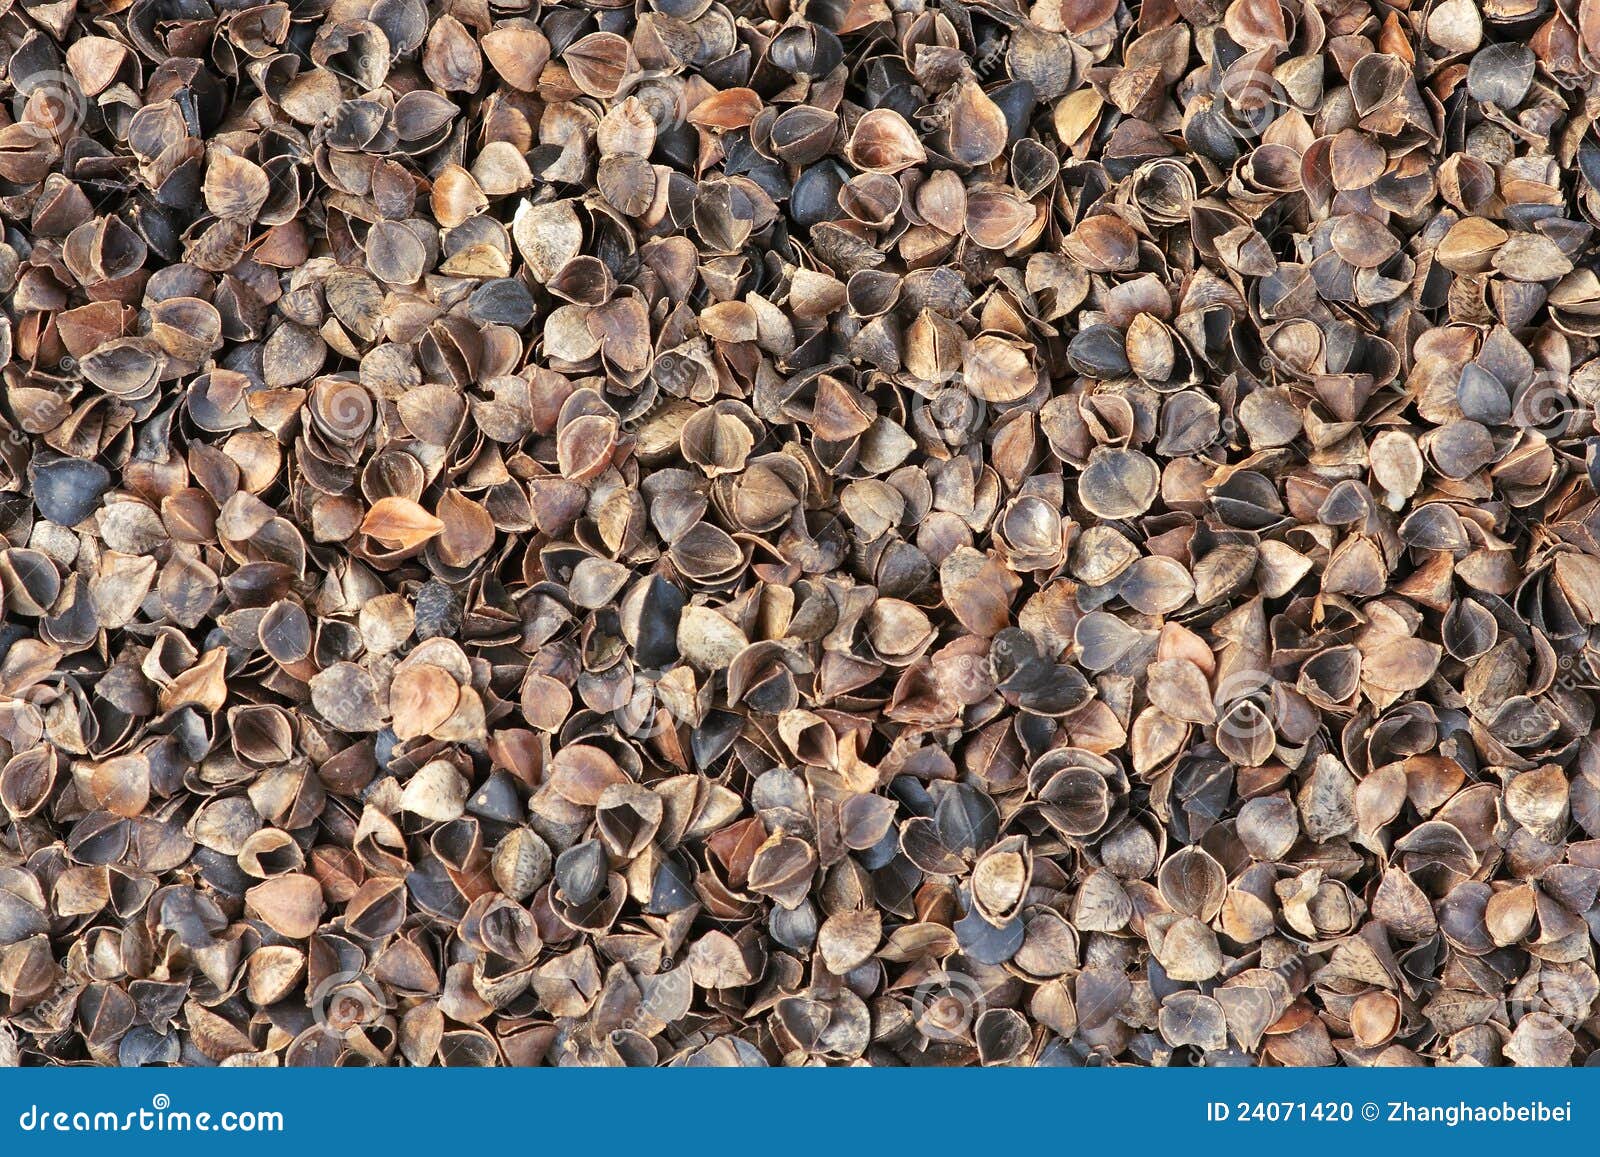 Buckwheat hulls stock photo. Image of brown, natural - 24071420